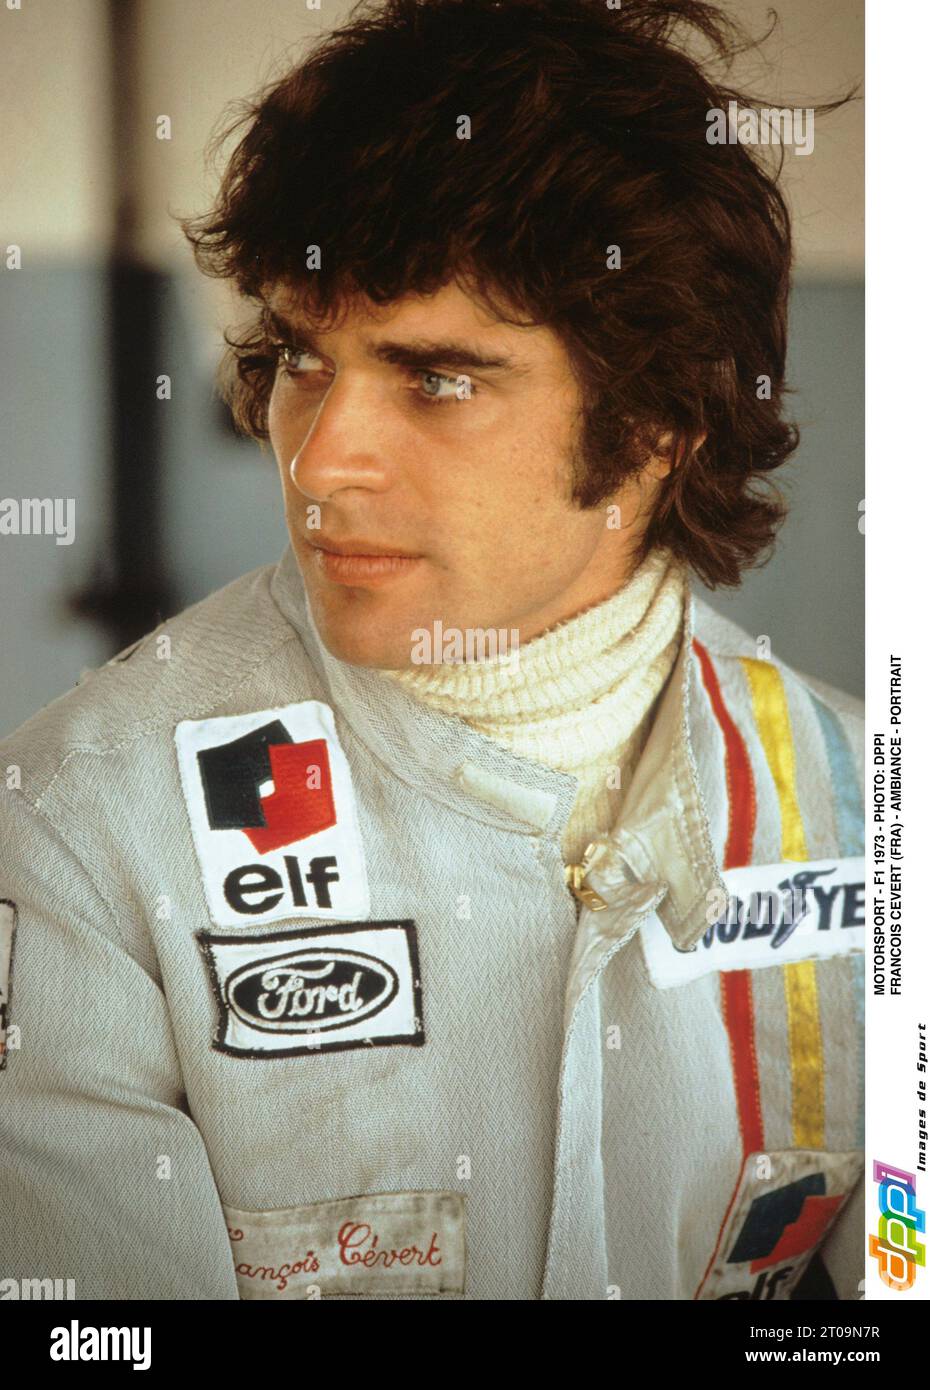 MOTORSPORT - F1 1973 - PHOTO: DPPI FRANCOIS CEVERT (FRA) - AMBIANCE - PORTRAIT Stock Photo